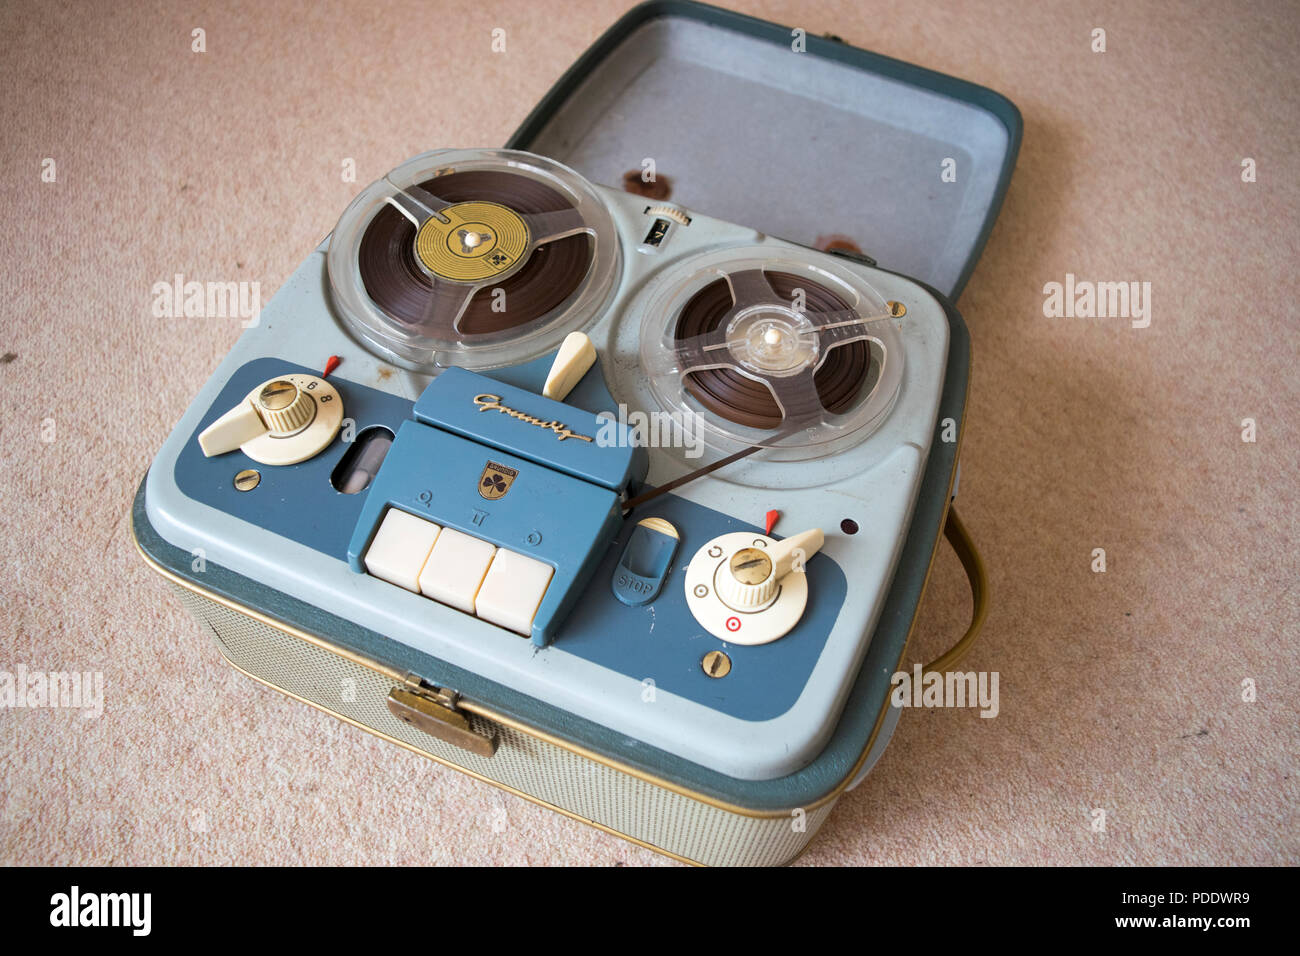 https://c8.alamy.com/comp/PDDWR9/grundig-reel-to-reel-tape-recorder-from-the-1960s-PDDWR9.jpg